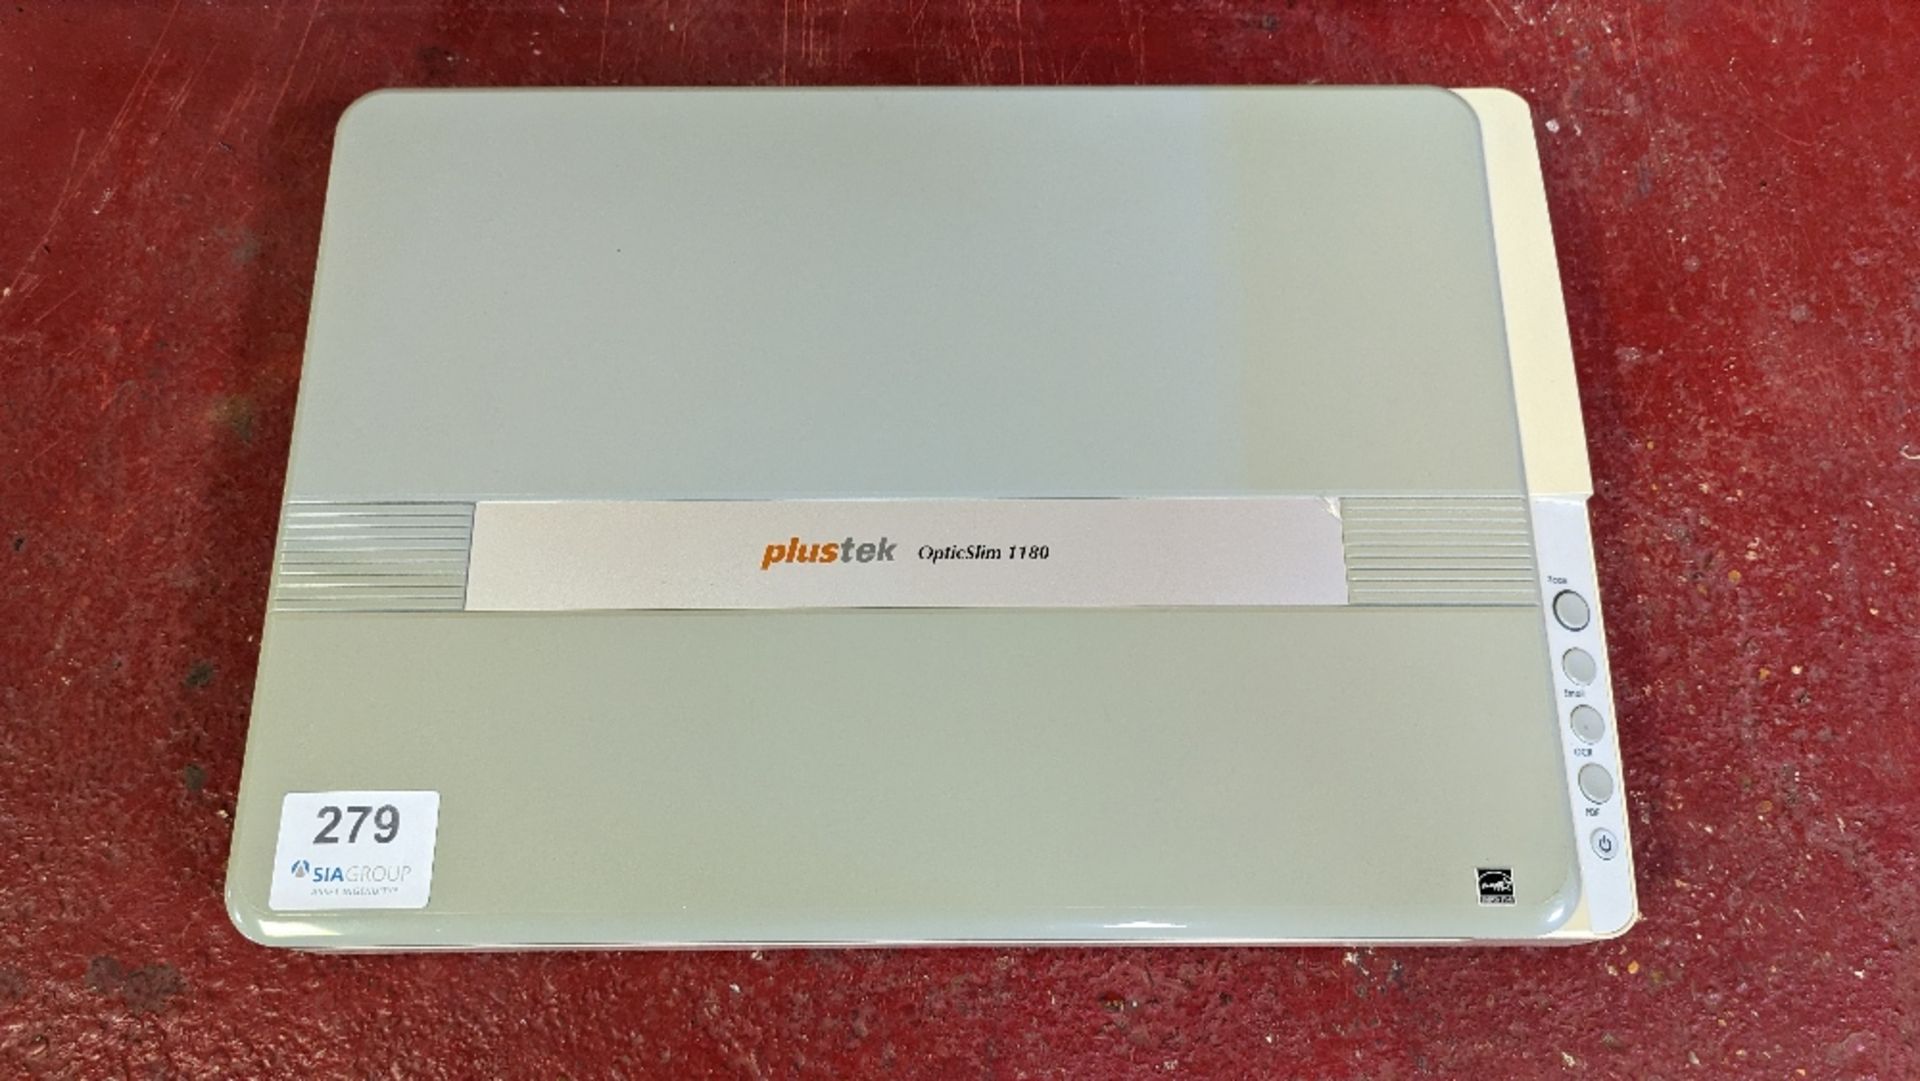 Plustek OpticSlim 1180 A3 scanner - Image 2 of 4